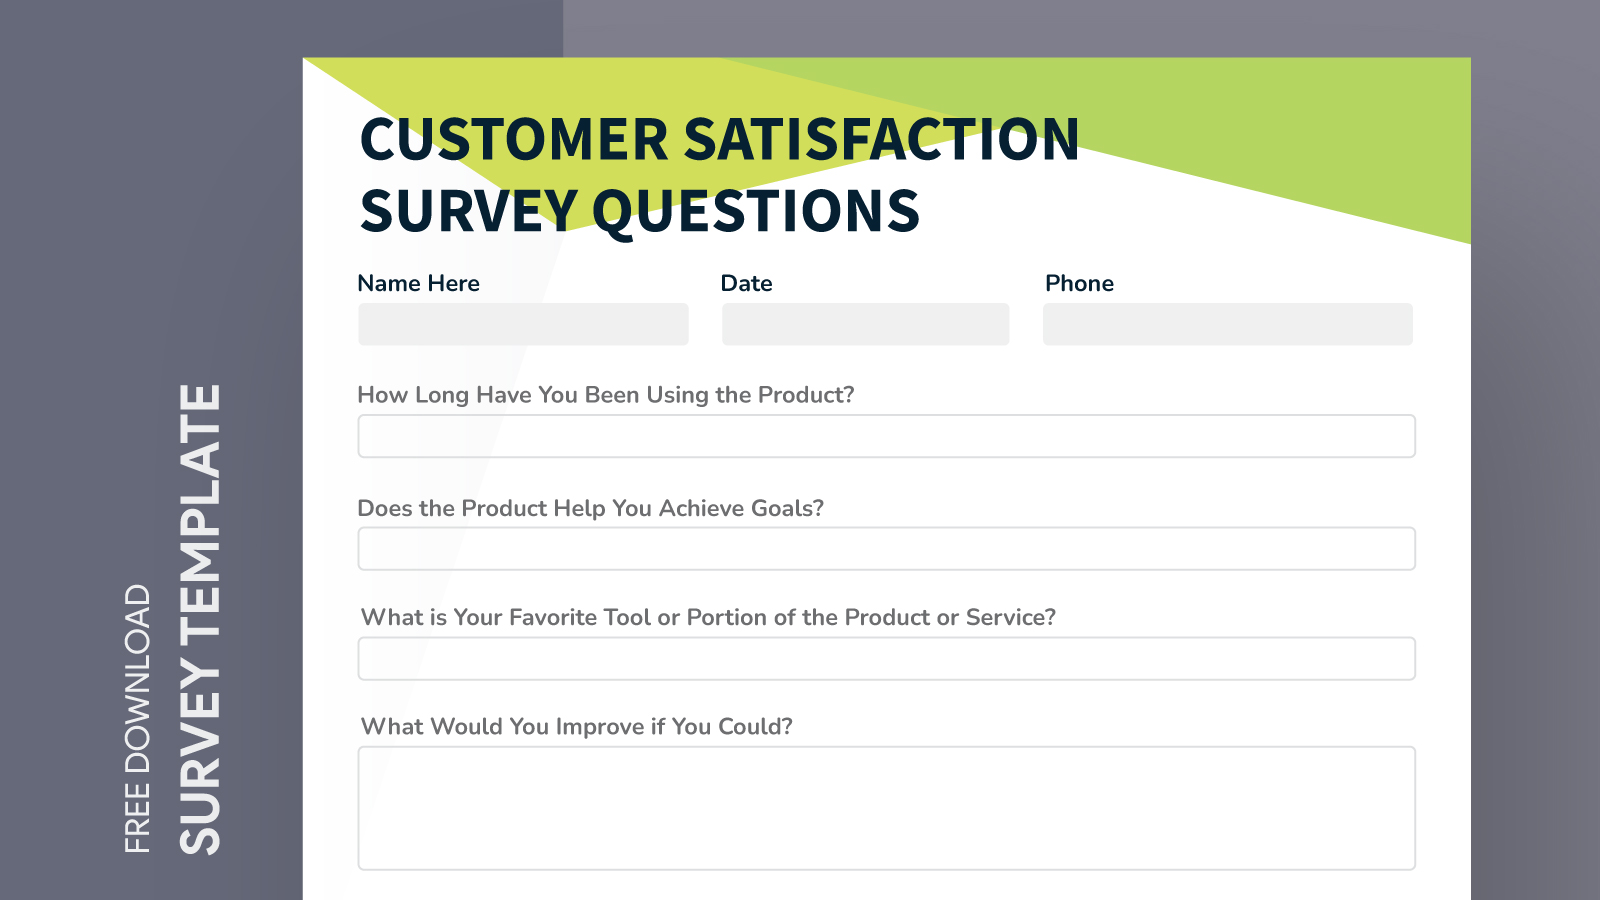 Customer Satisfaction Survey Free Google Docs Template - gdoc.io